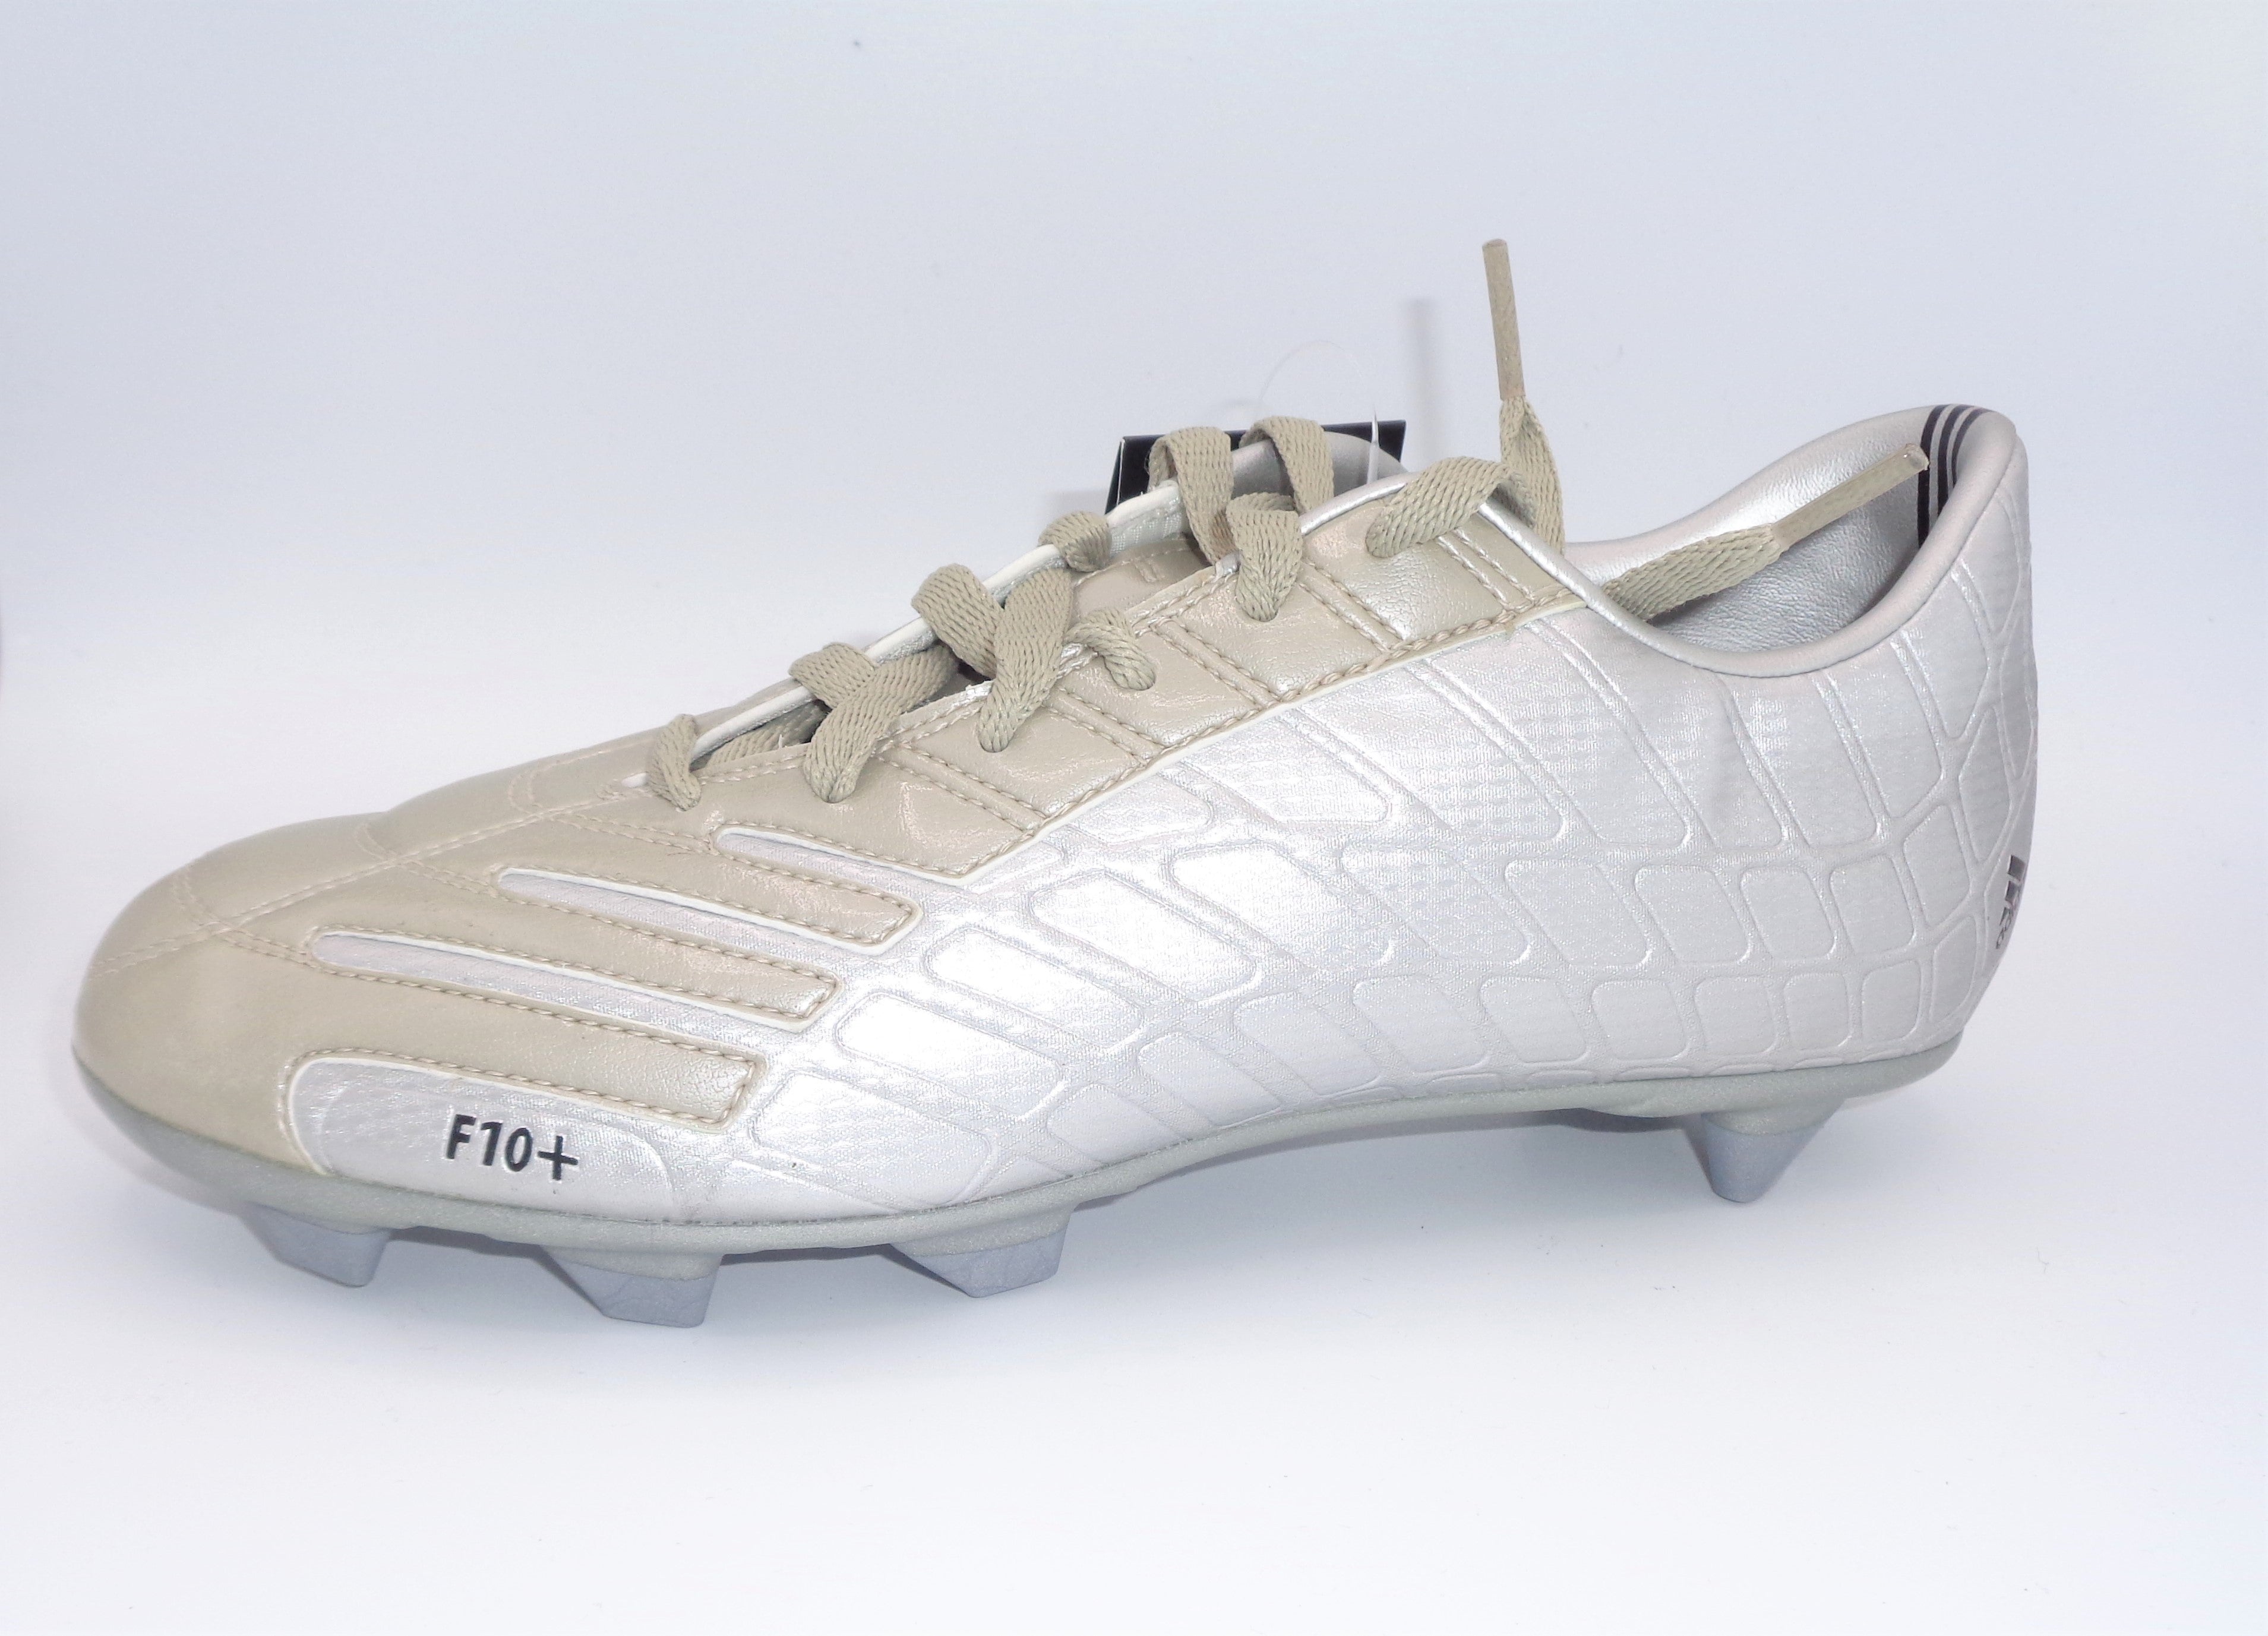 ADIDAS 2005 TRX MOULDED SILVER FOOTBALL FOOTS - ADIDAS - SIZE – HA7 CLASSICAL SHIRTS